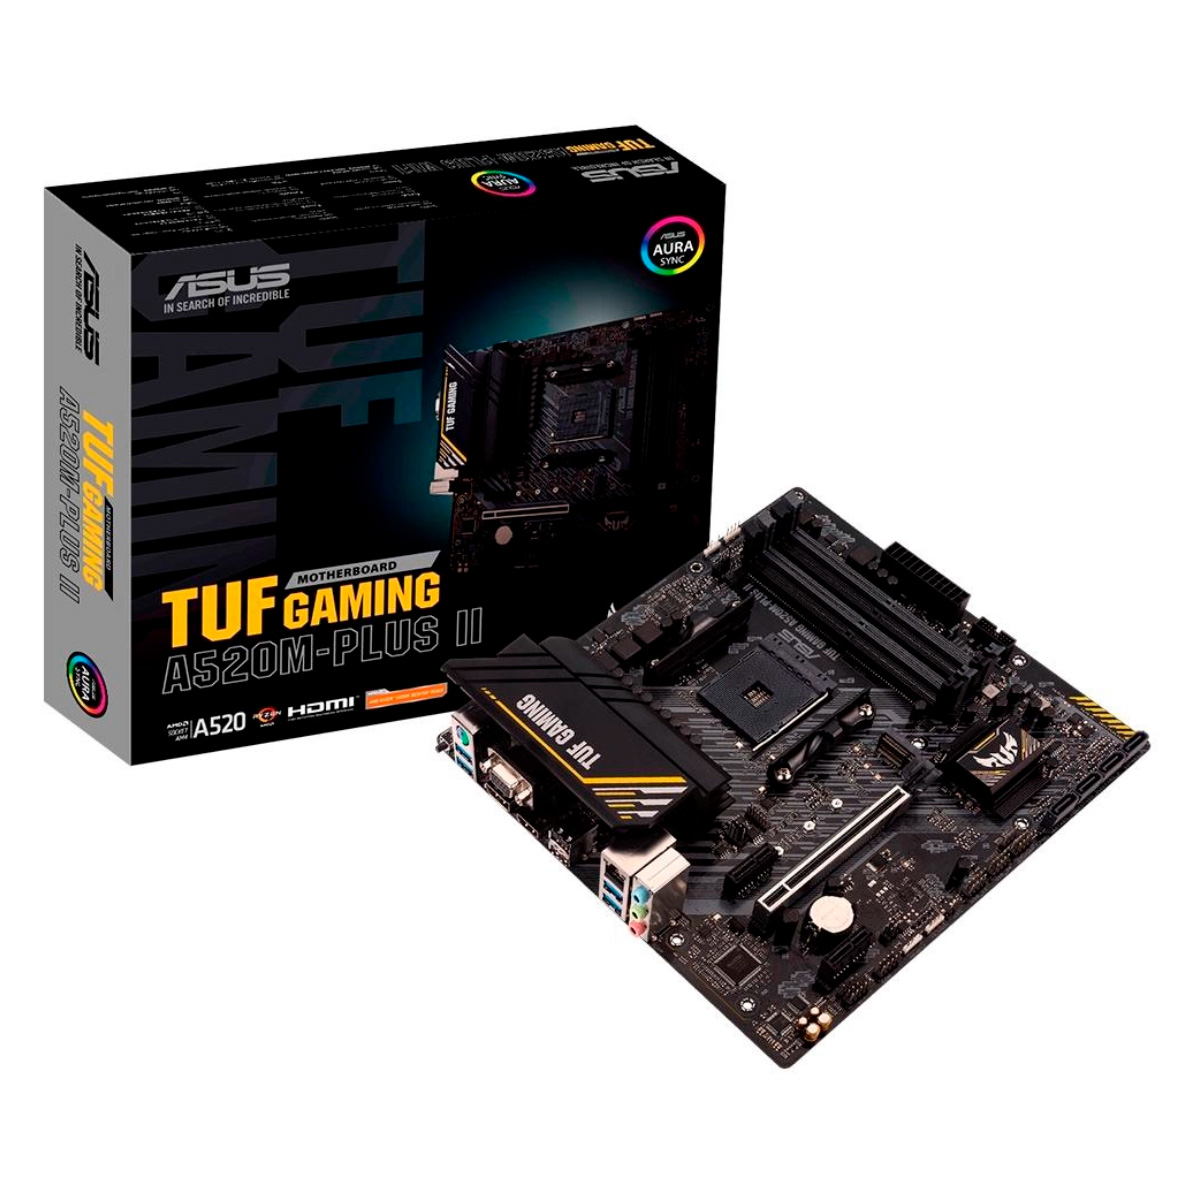 Asus TUF Gaming A520M PLUS II (AM4 - DDR4 4866 O.C) - Chipset AMD A520 - USB 3.2 - Slot M.2 - Micro ATX